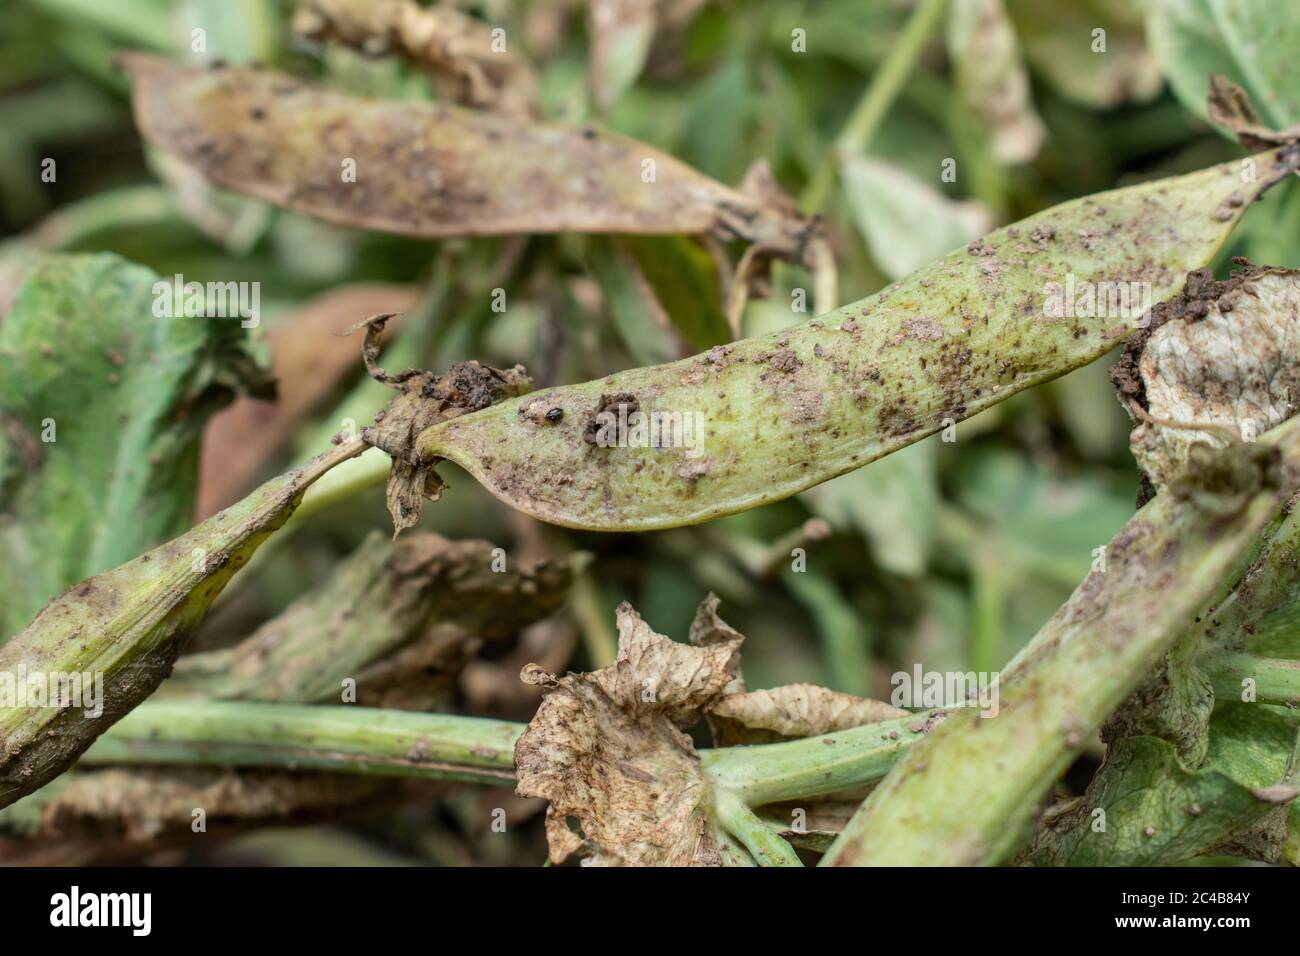 Powdery mildew of peas, fungal plant disease Erysiphe pisi Stock Photo